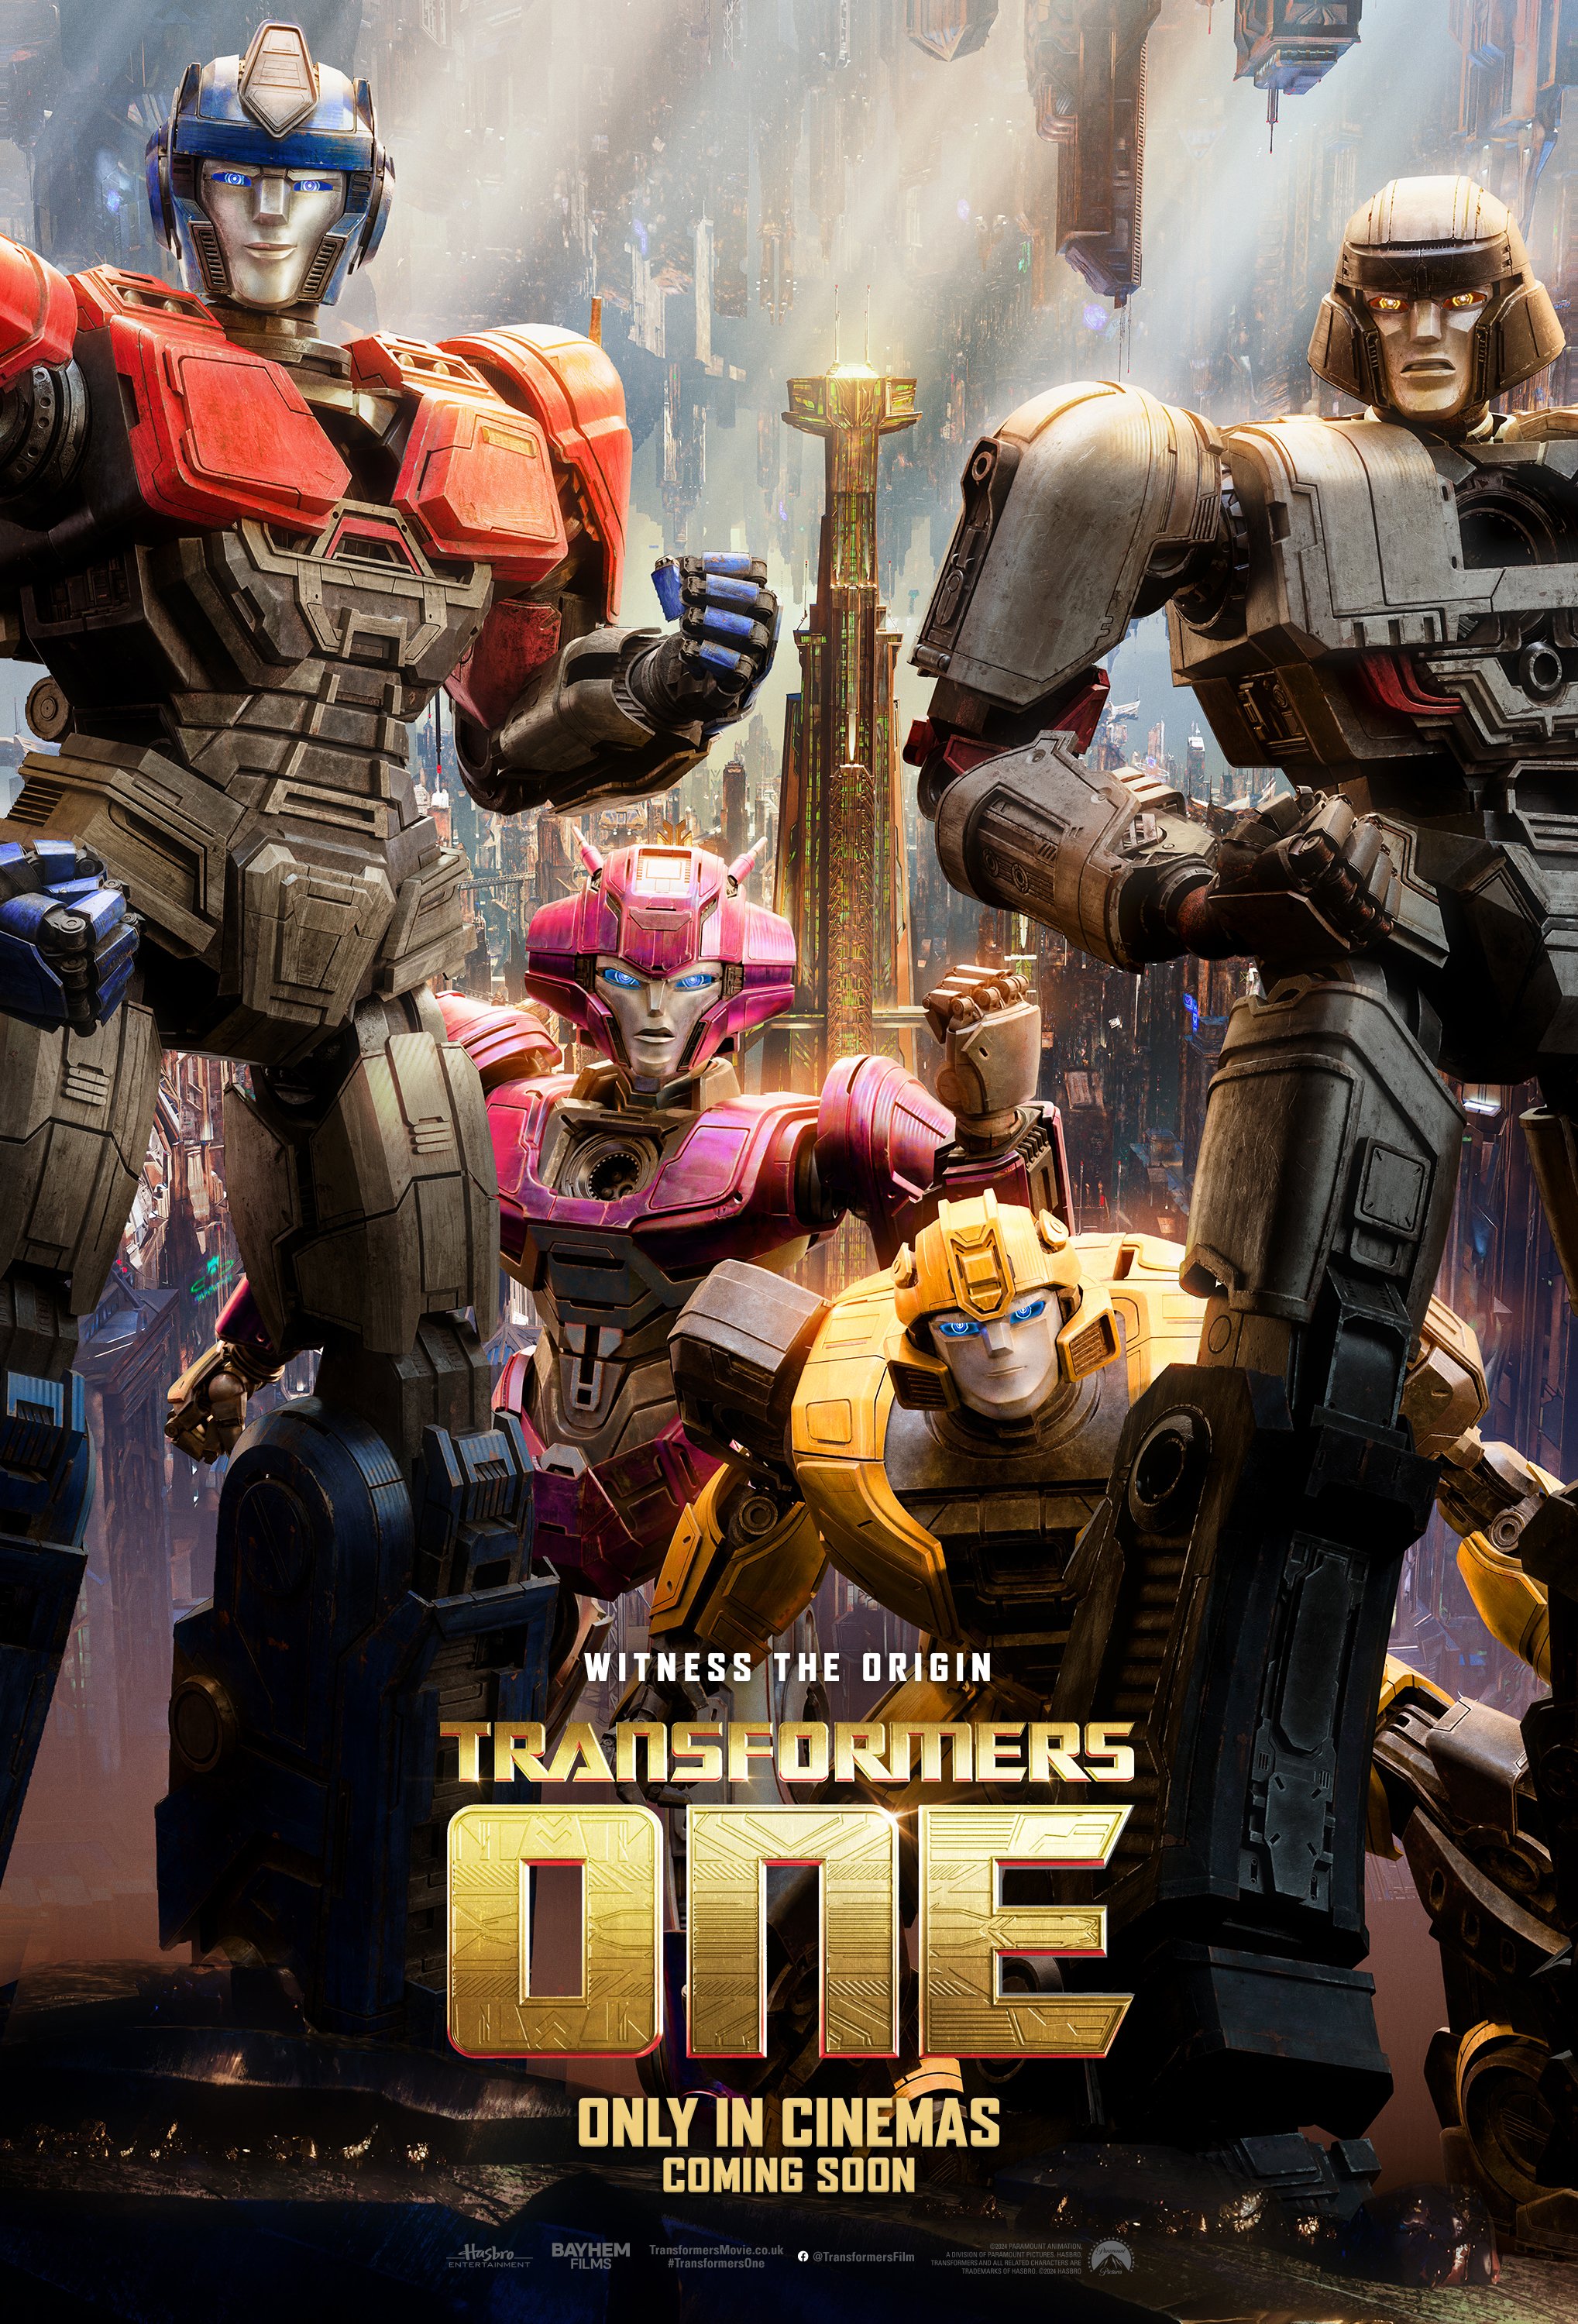 Transformers One lanza su primer avance 20